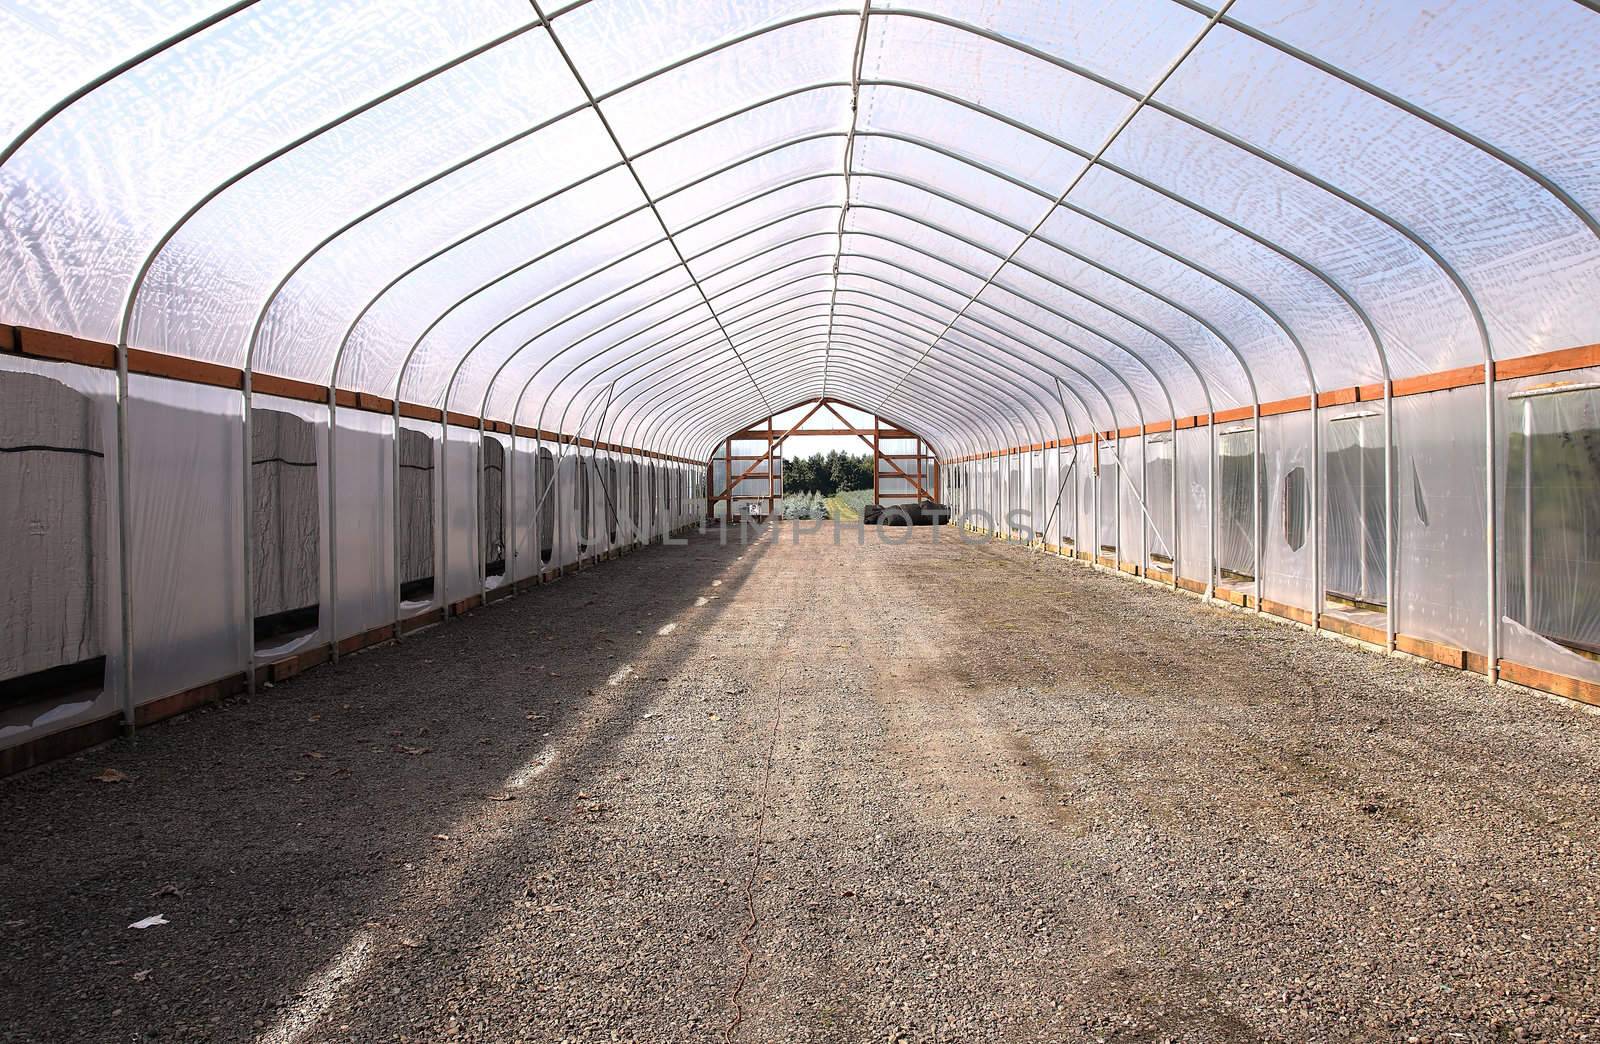 Large empty greenhouse ready for seedlings storage and acclimatization, Oregon.